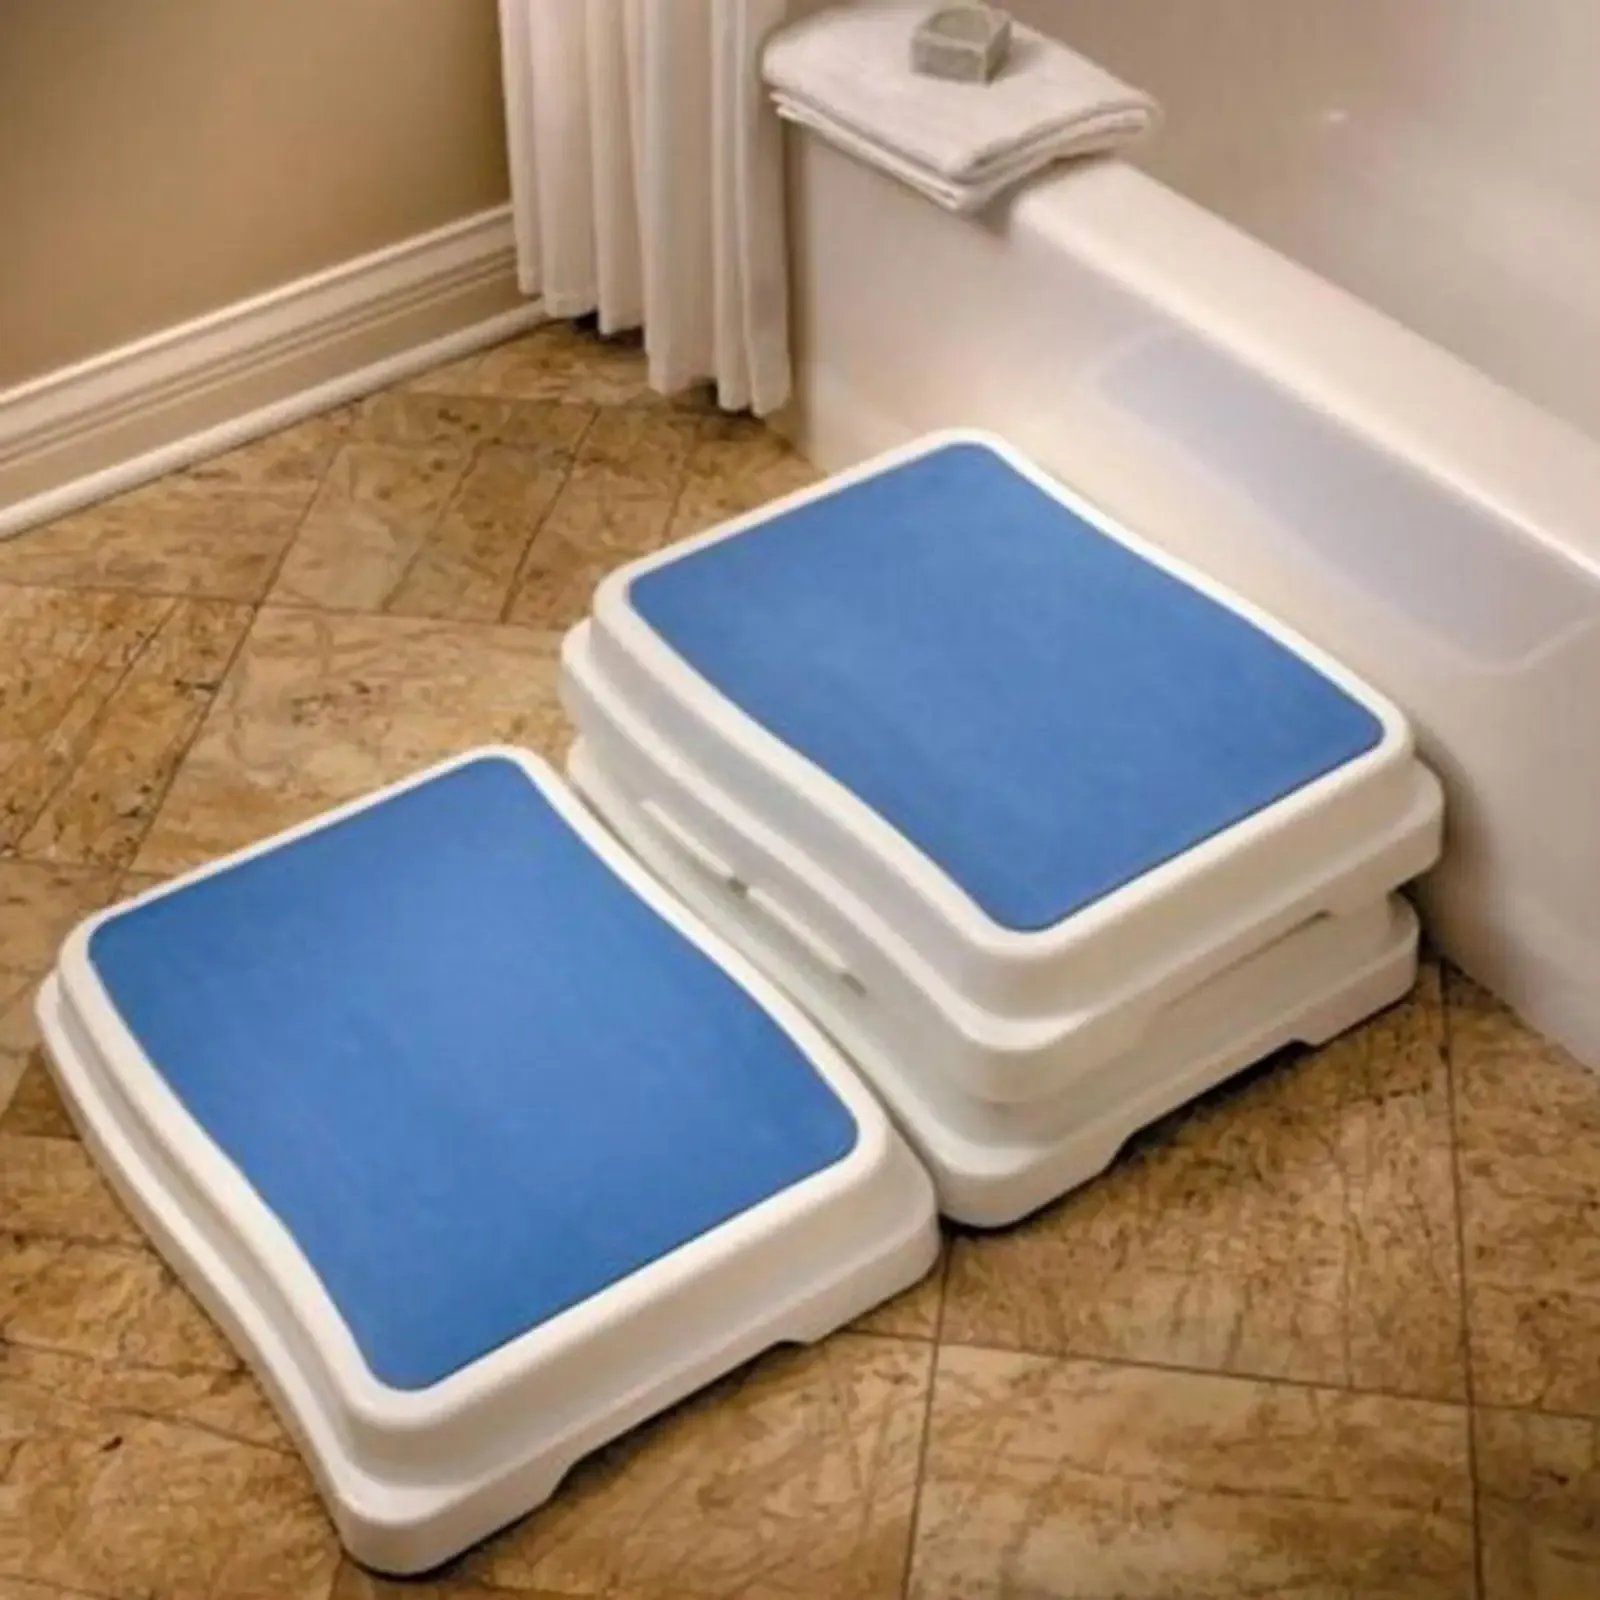 Mats Step Stool Non Slip Assistance Lightweight Portable Step Riser for Shower Bed Indoor and Outdoor Bedside Senior